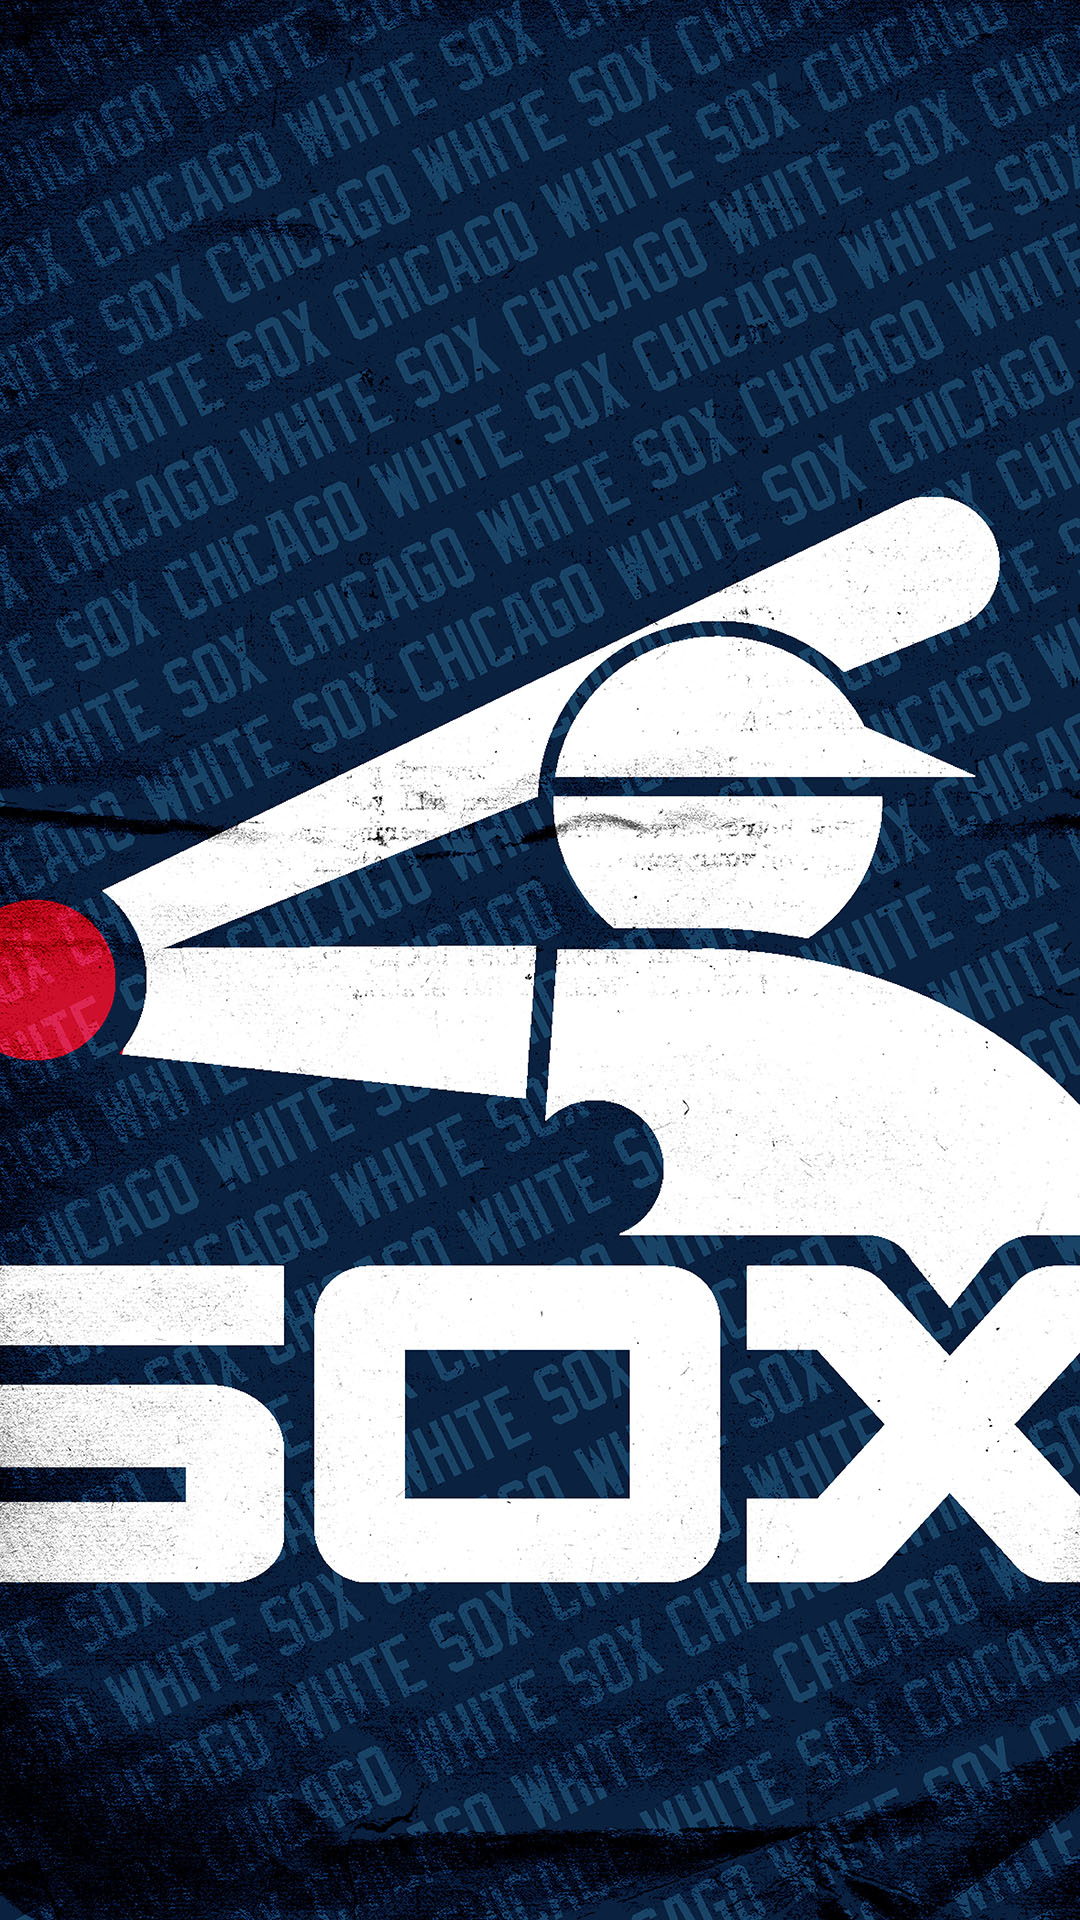 White Sox Wallpaper Chicago